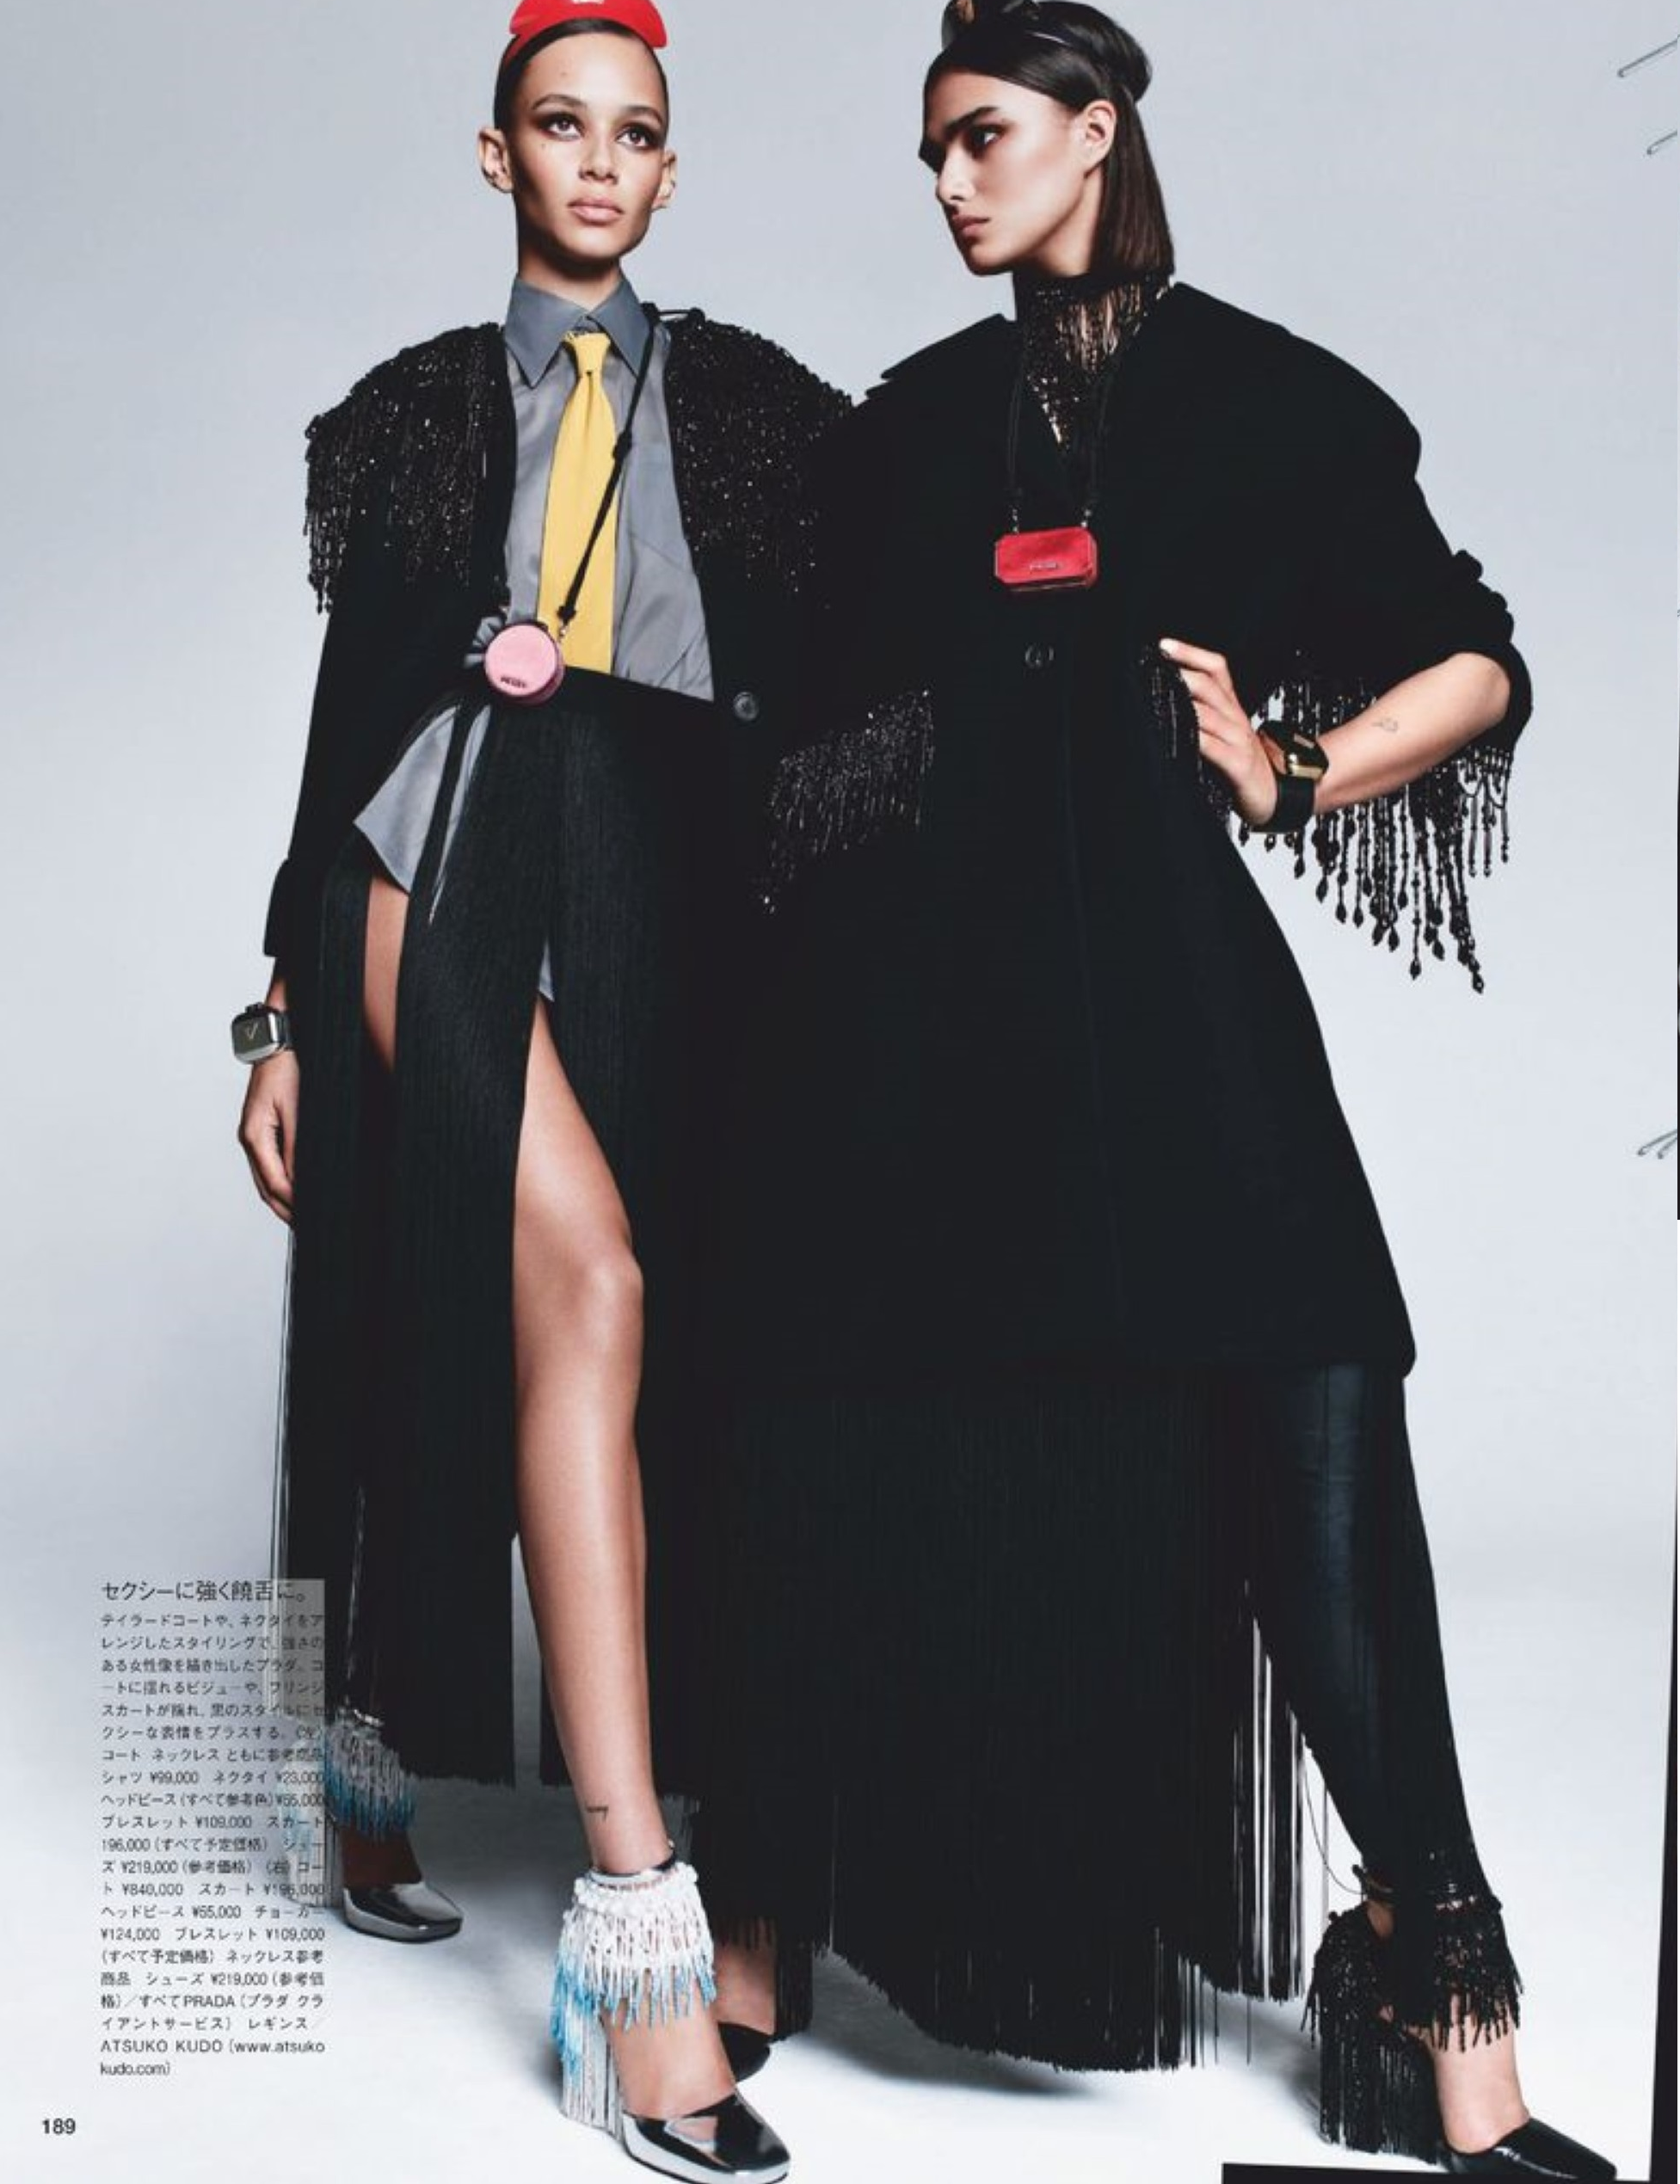 1-Luigi Iango 'Sketch Book Style' in Vogue Japan Oct 2020 (2) S.png